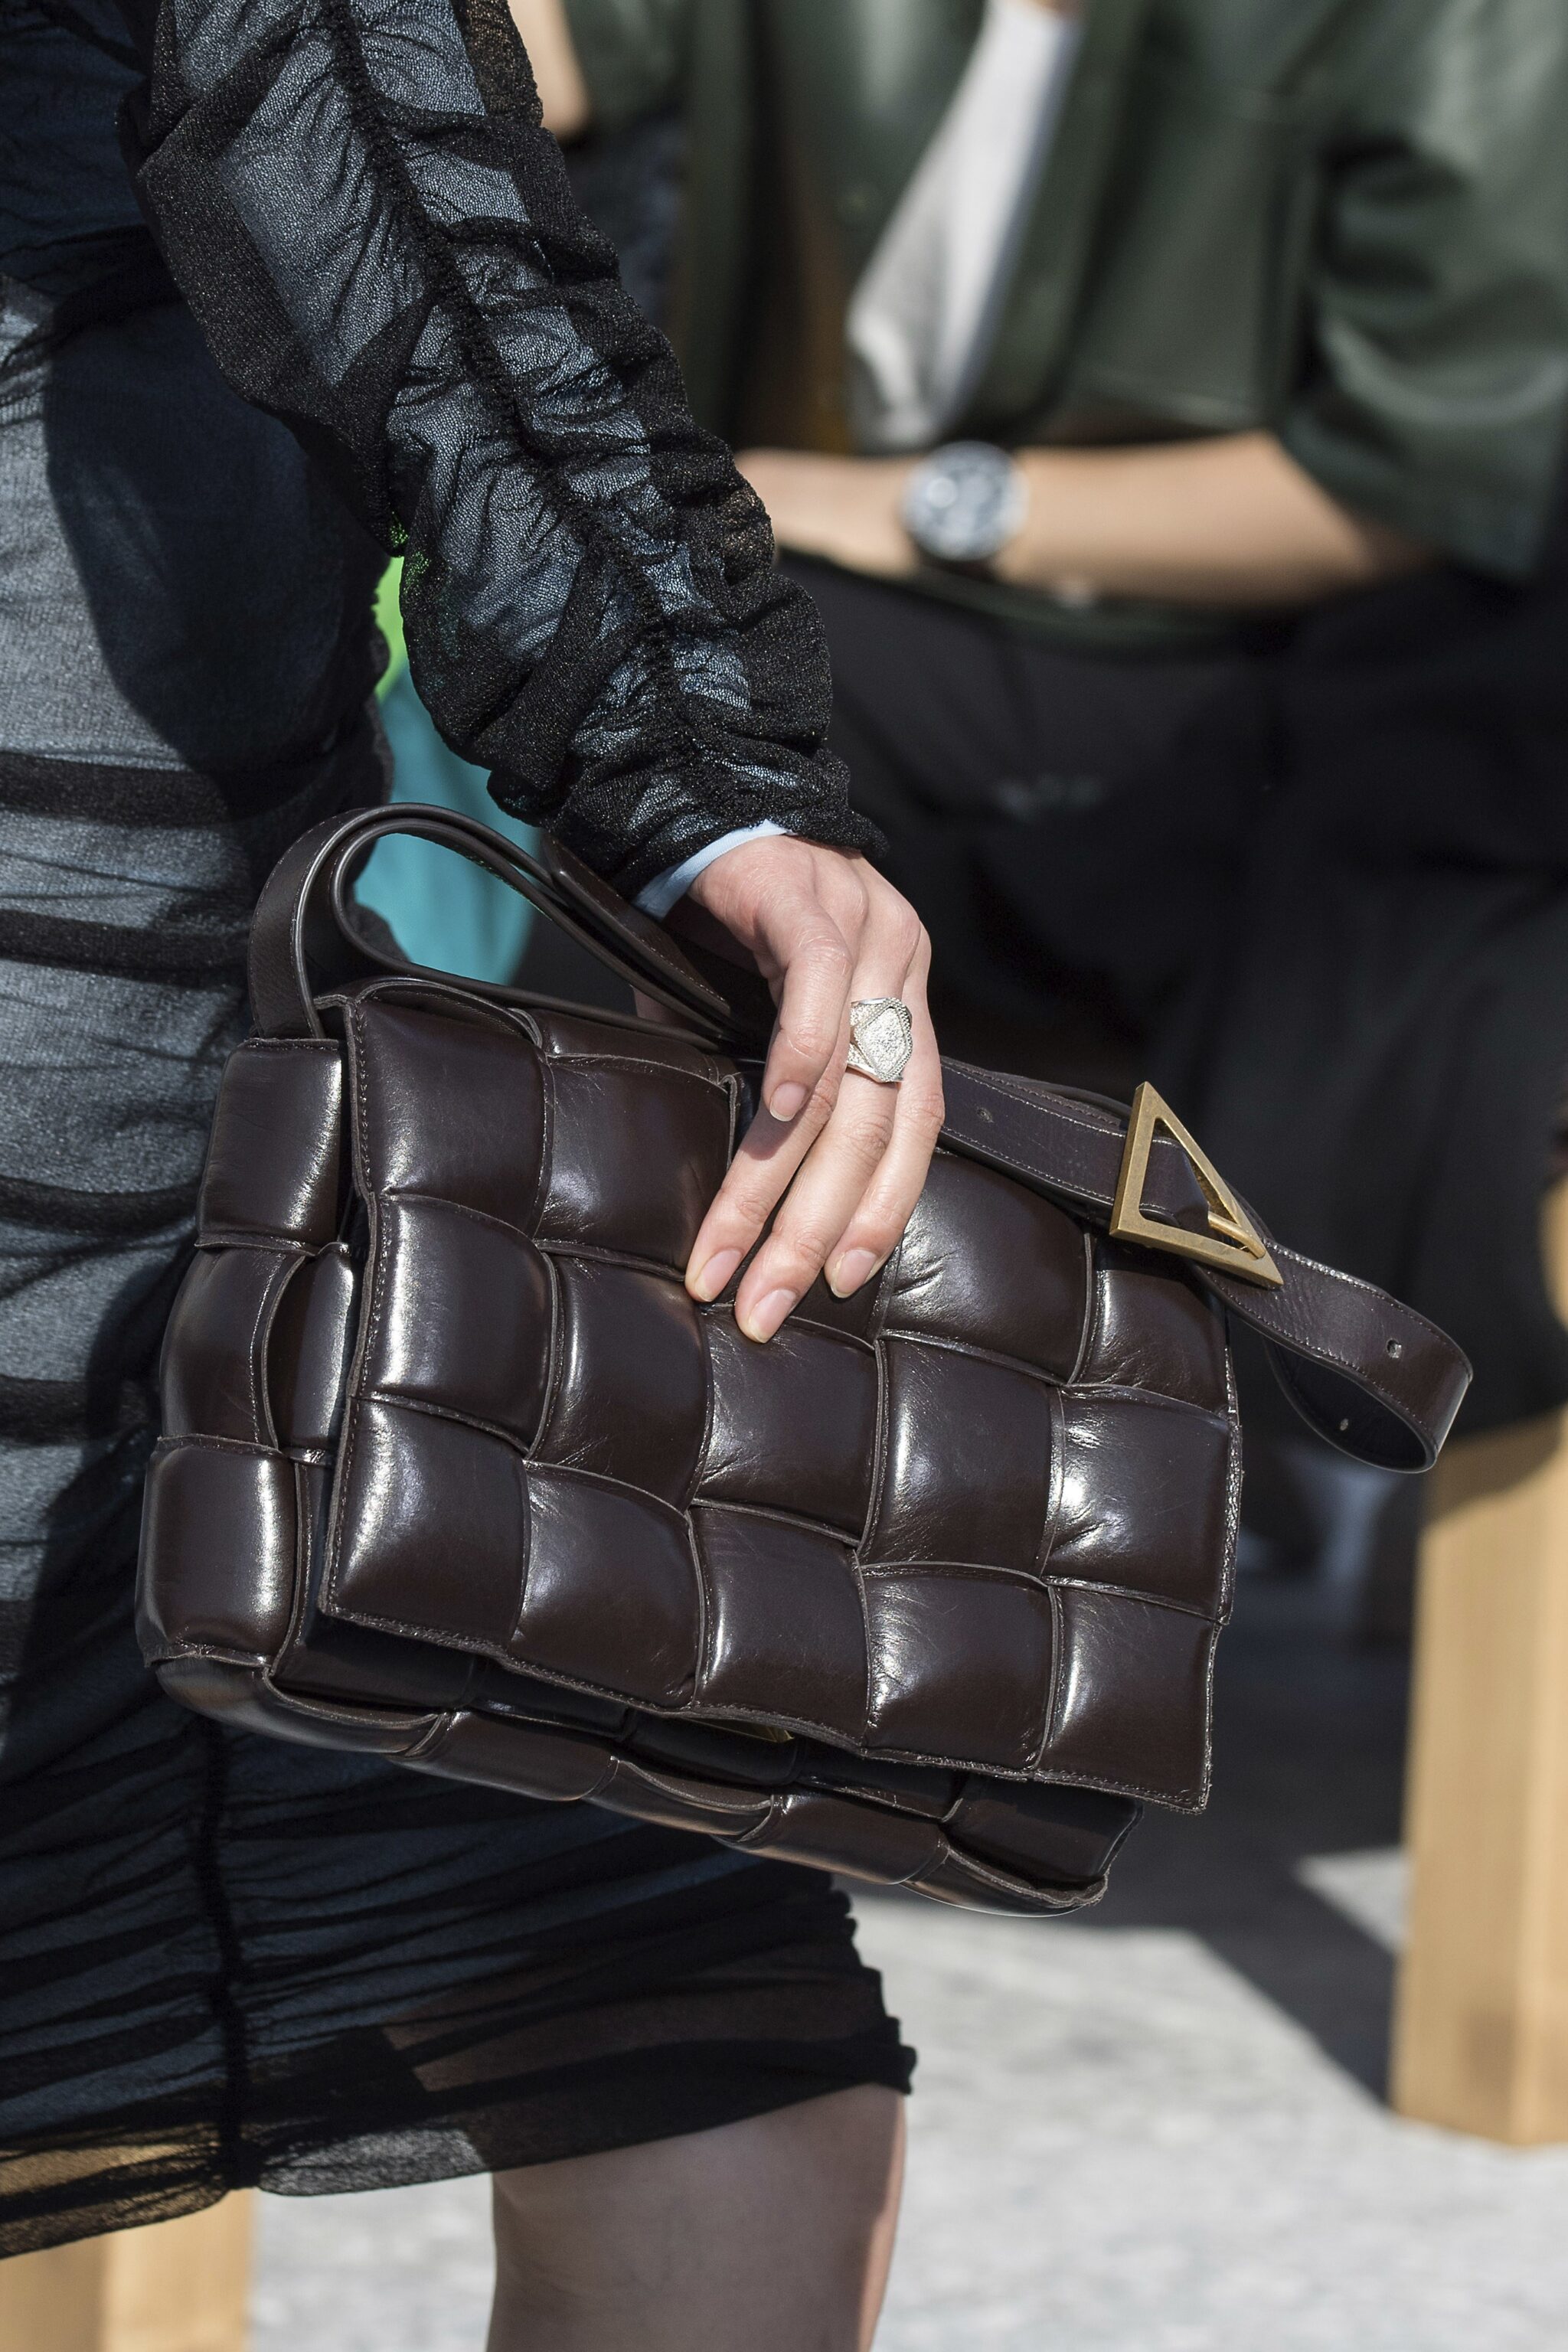 Bottega Veneta's Pouch bag is 2019's answer to the It bag